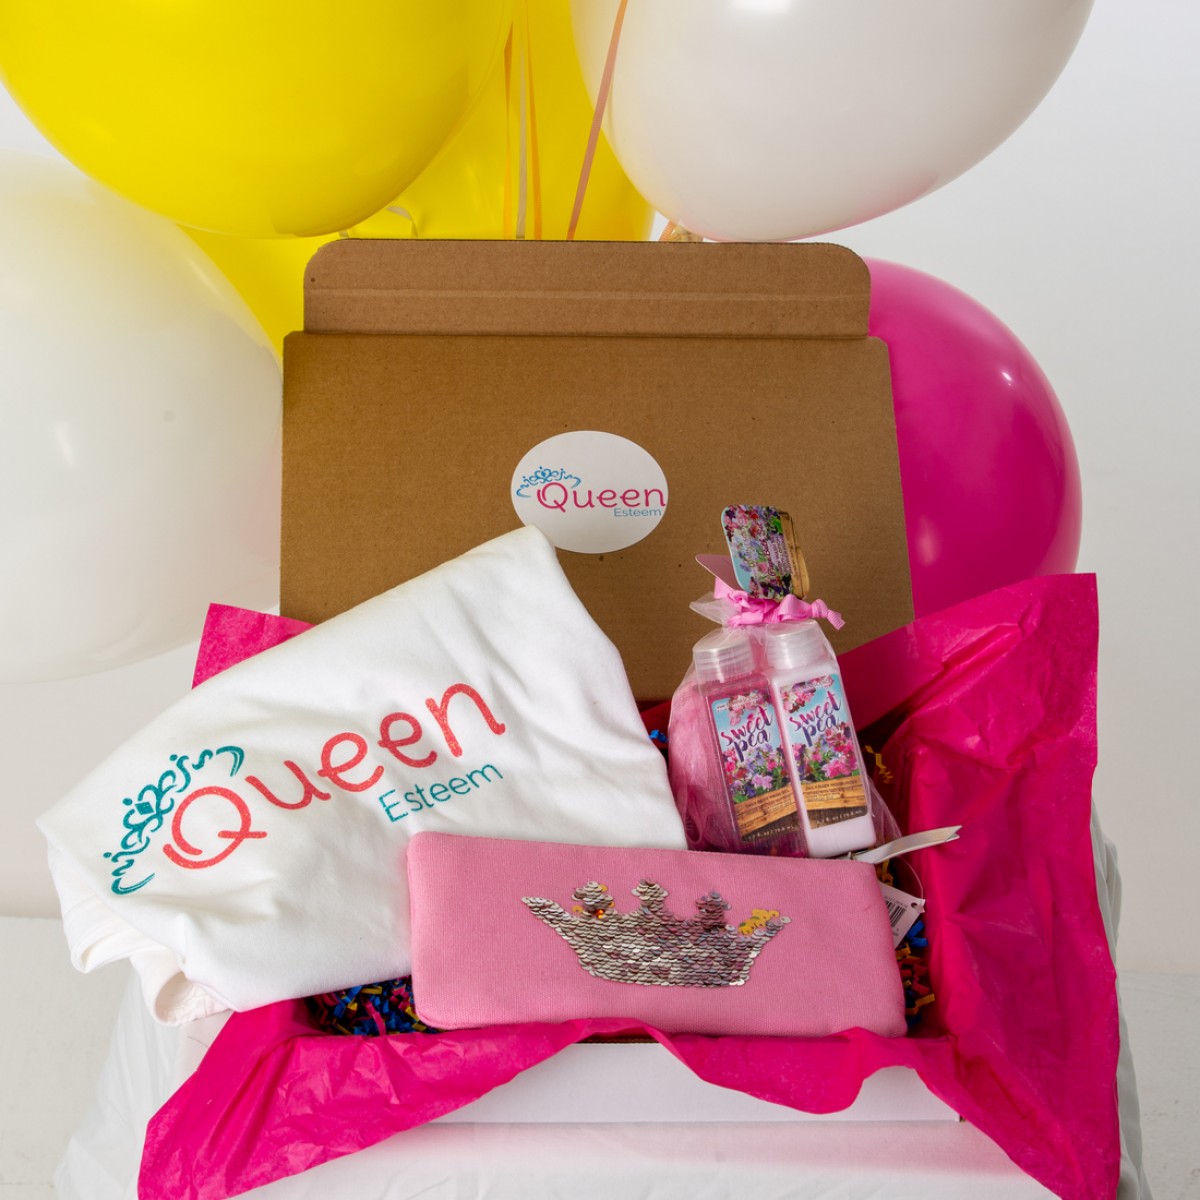 Queen Esteem Subscription Box